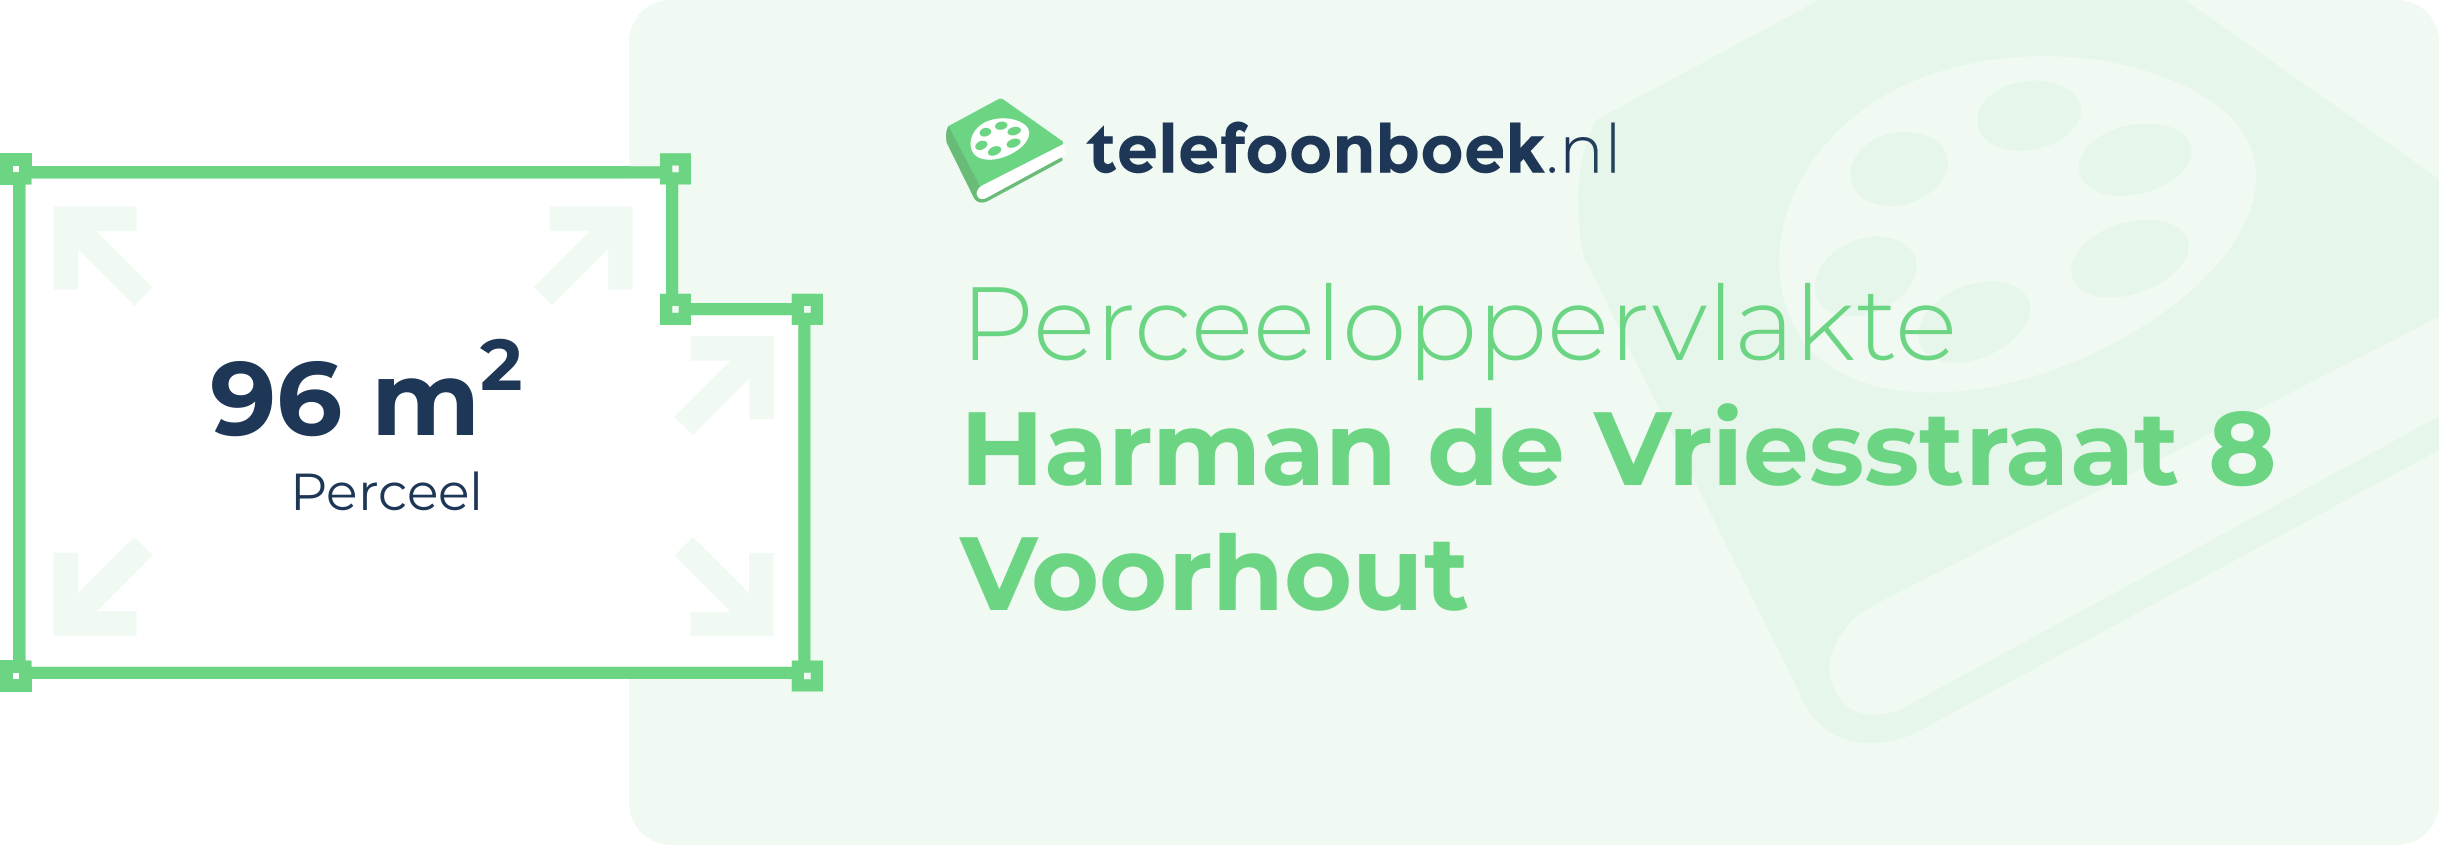 Perceeloppervlakte Harman De Vriesstraat 8 Voorhout